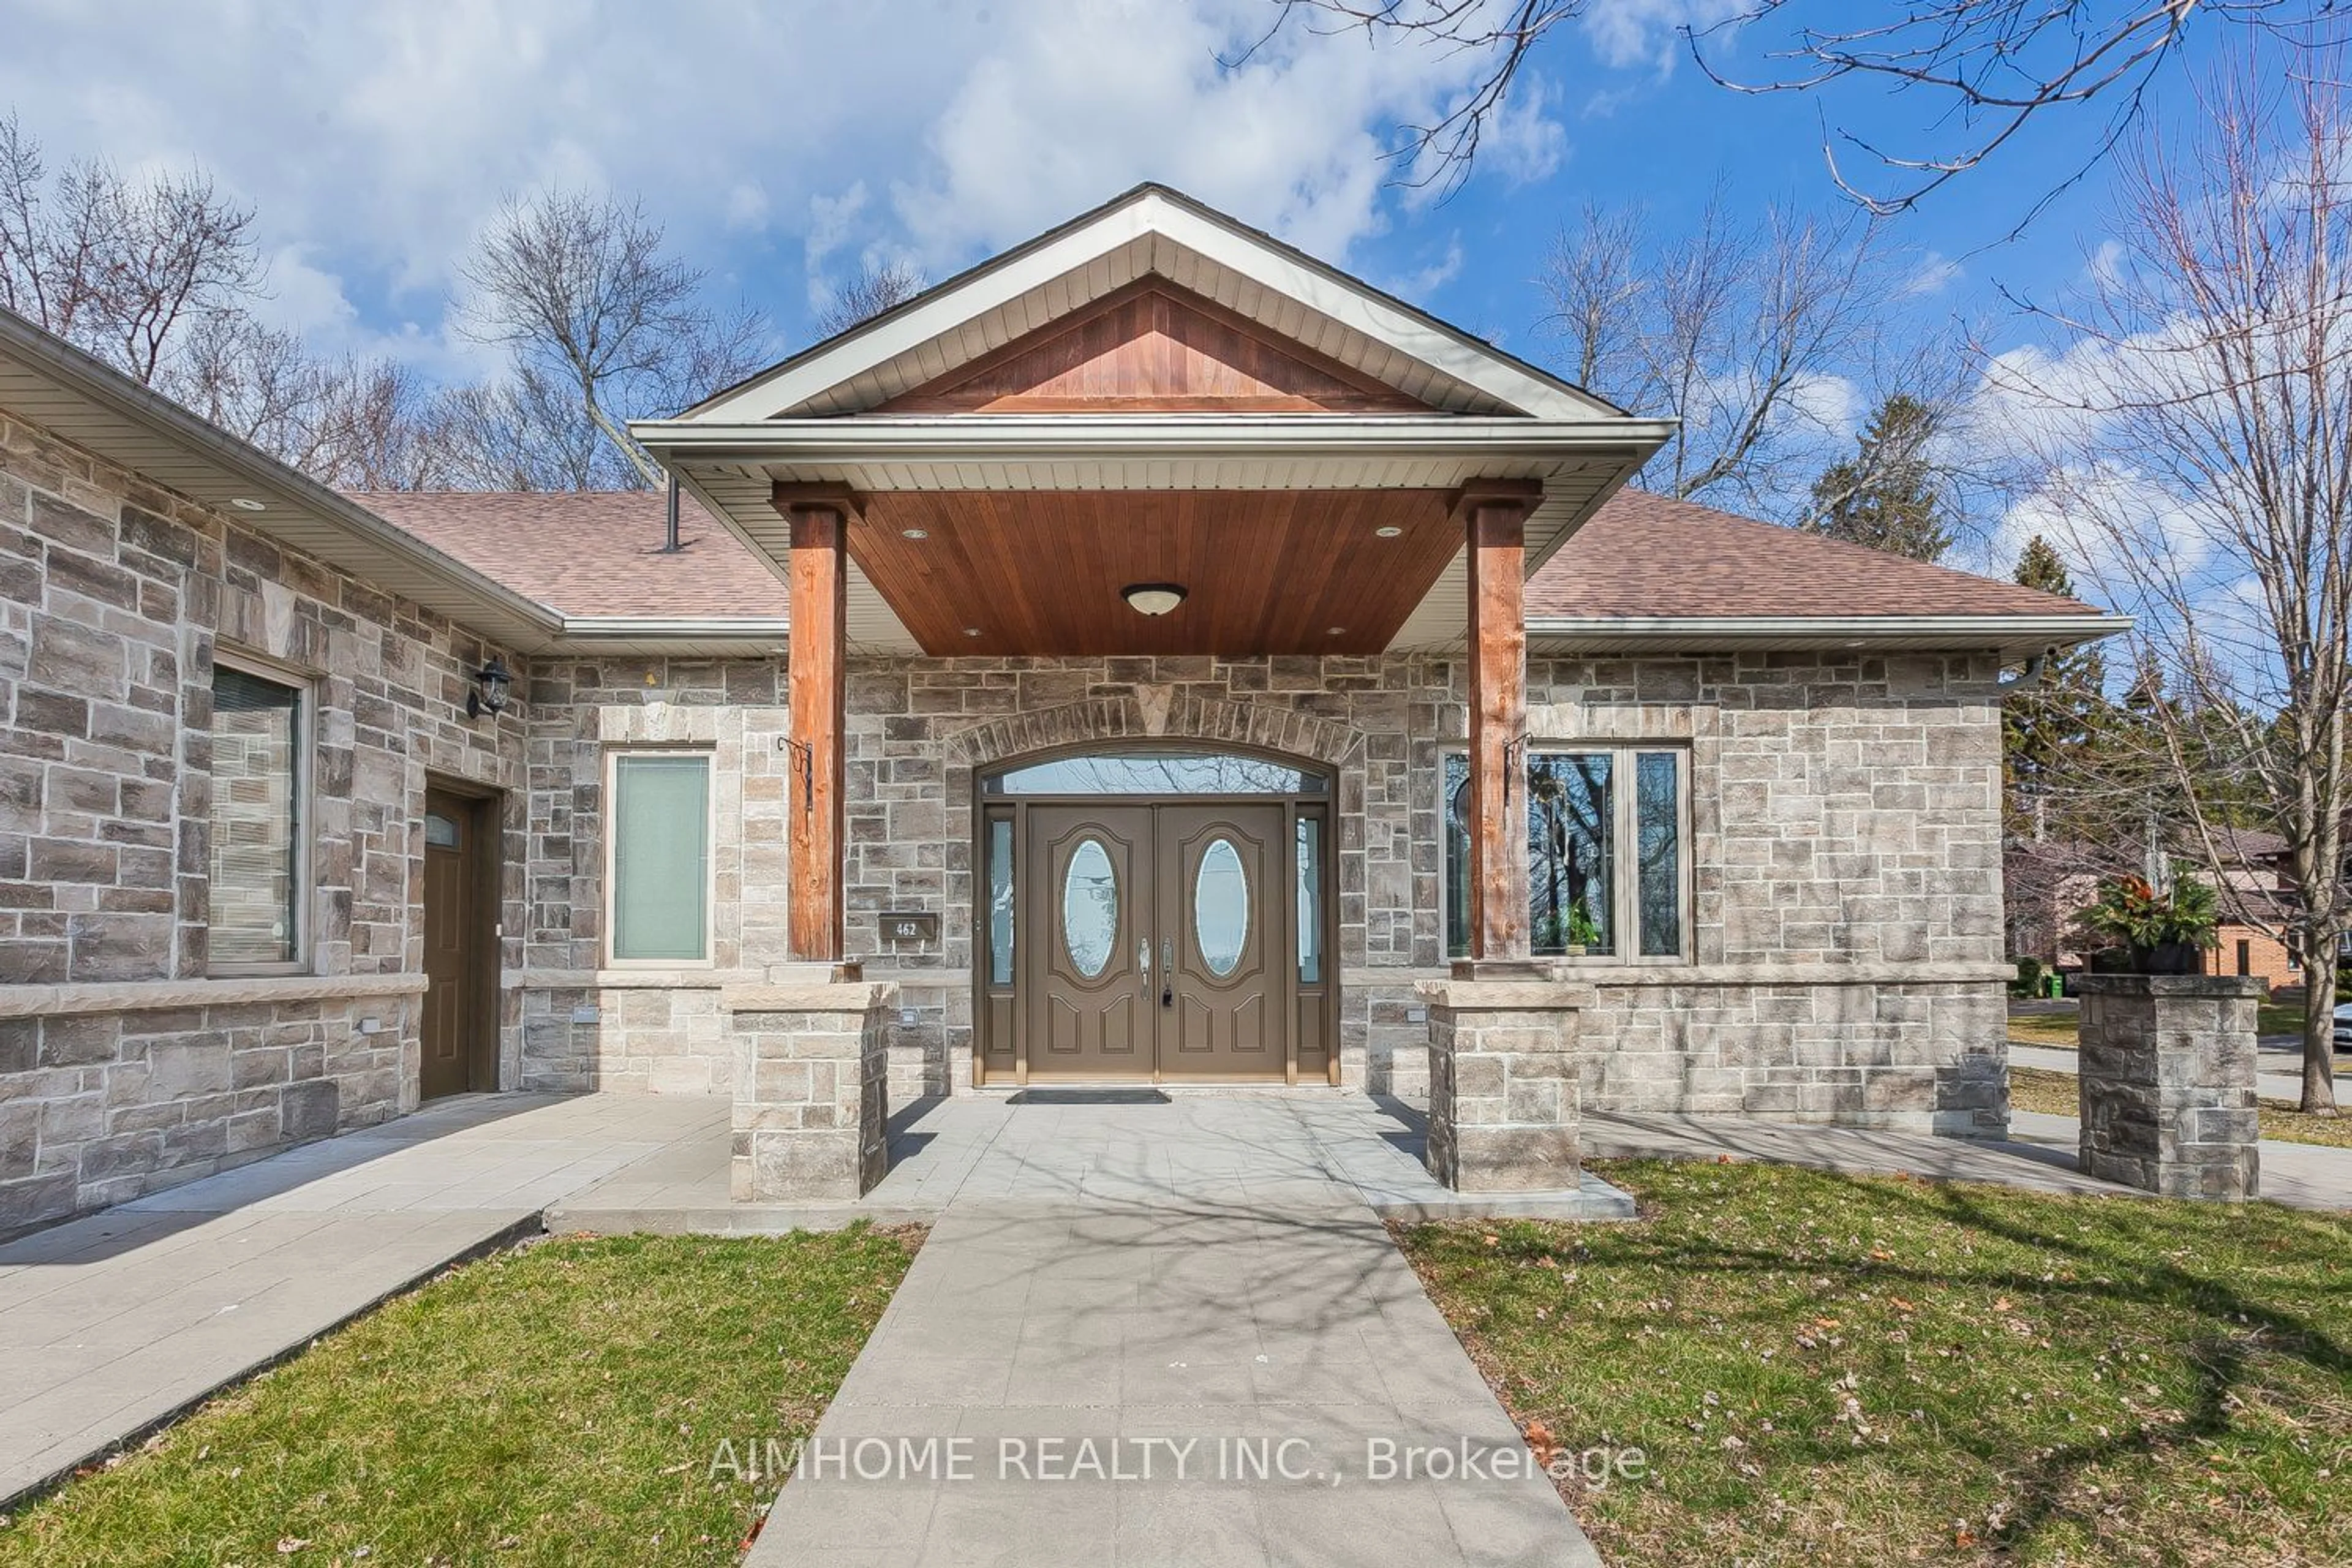 Home with brick exterior material for 462 Guildwood Pkwy, Toronto Ontario M1E 1R5